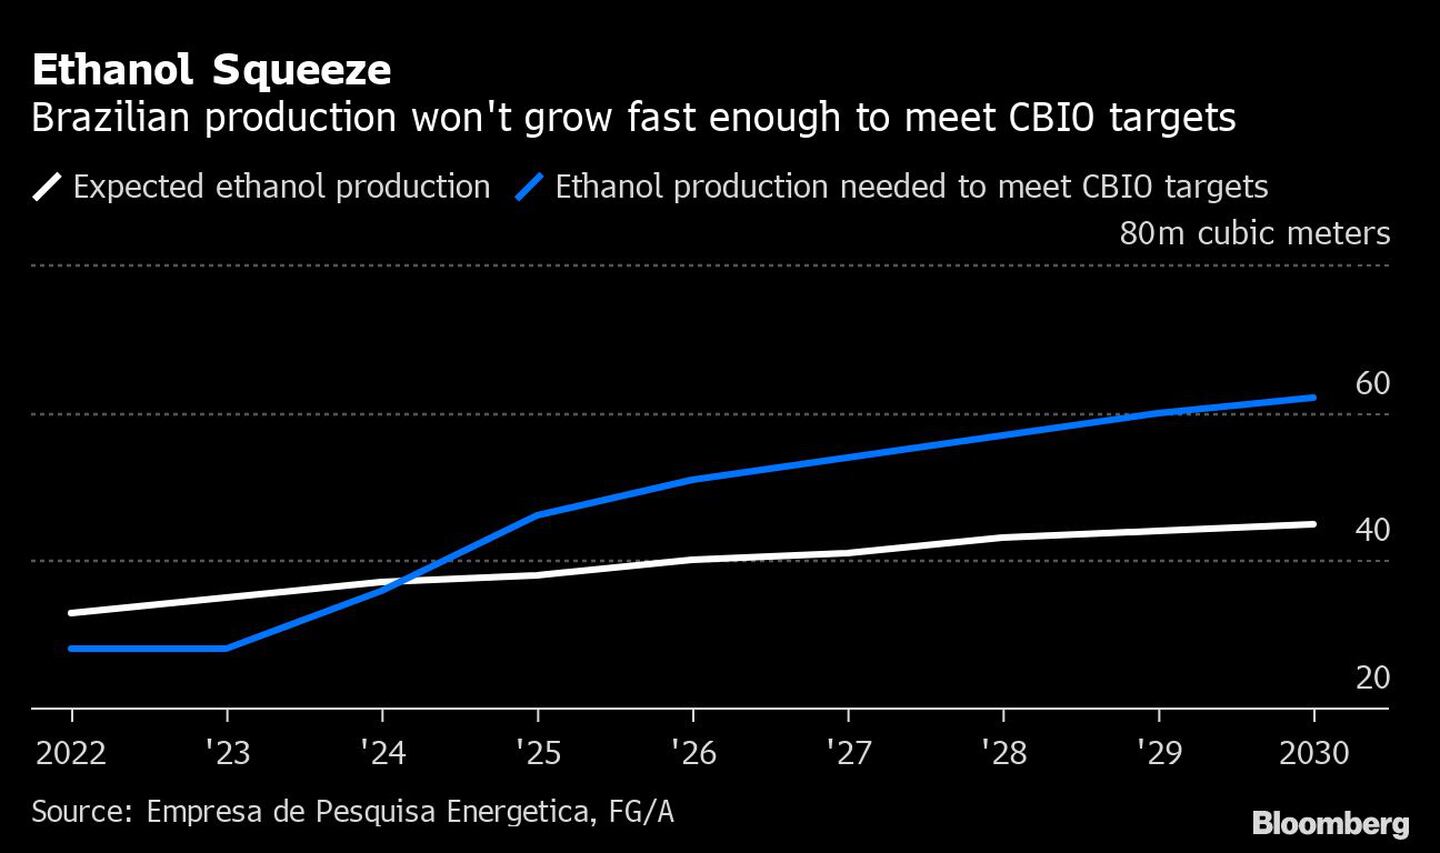 Ethanol Squeeze | Brazilian production won't grow fast enough to meet CBIO targetsdfd